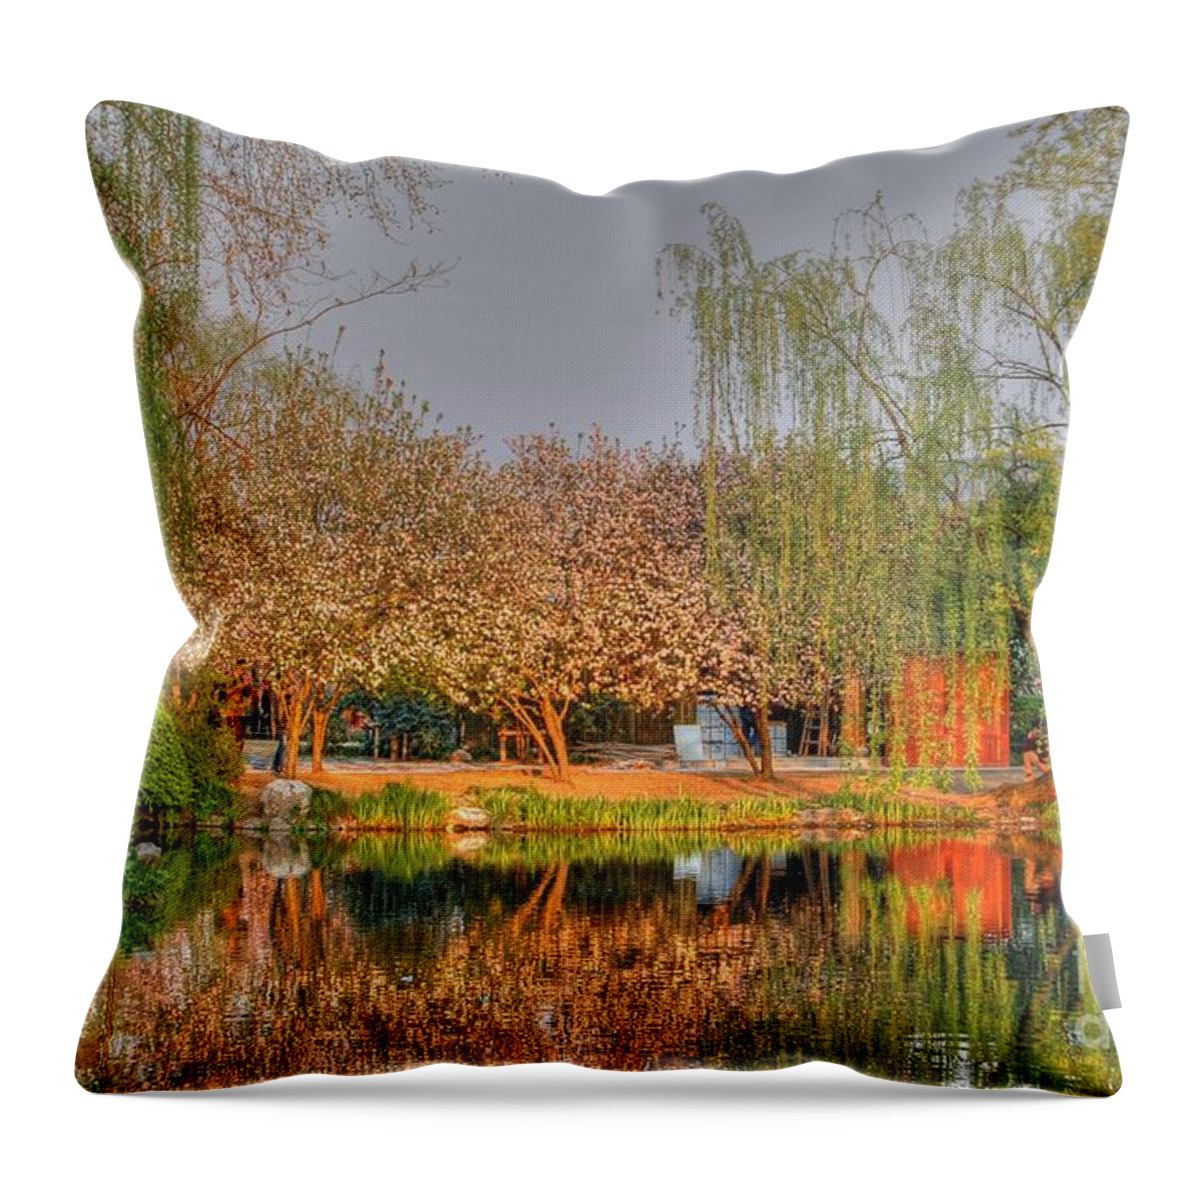 Asia Throw Pillow featuring the photograph Chineese Garden by Bill Hamilton